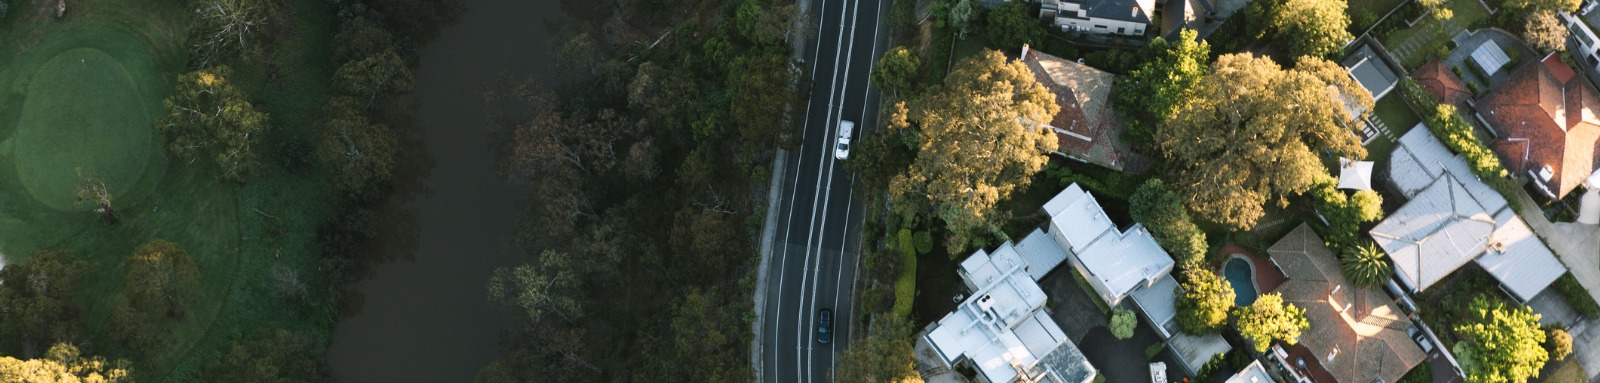 Aerial image of bush meeting edge of city